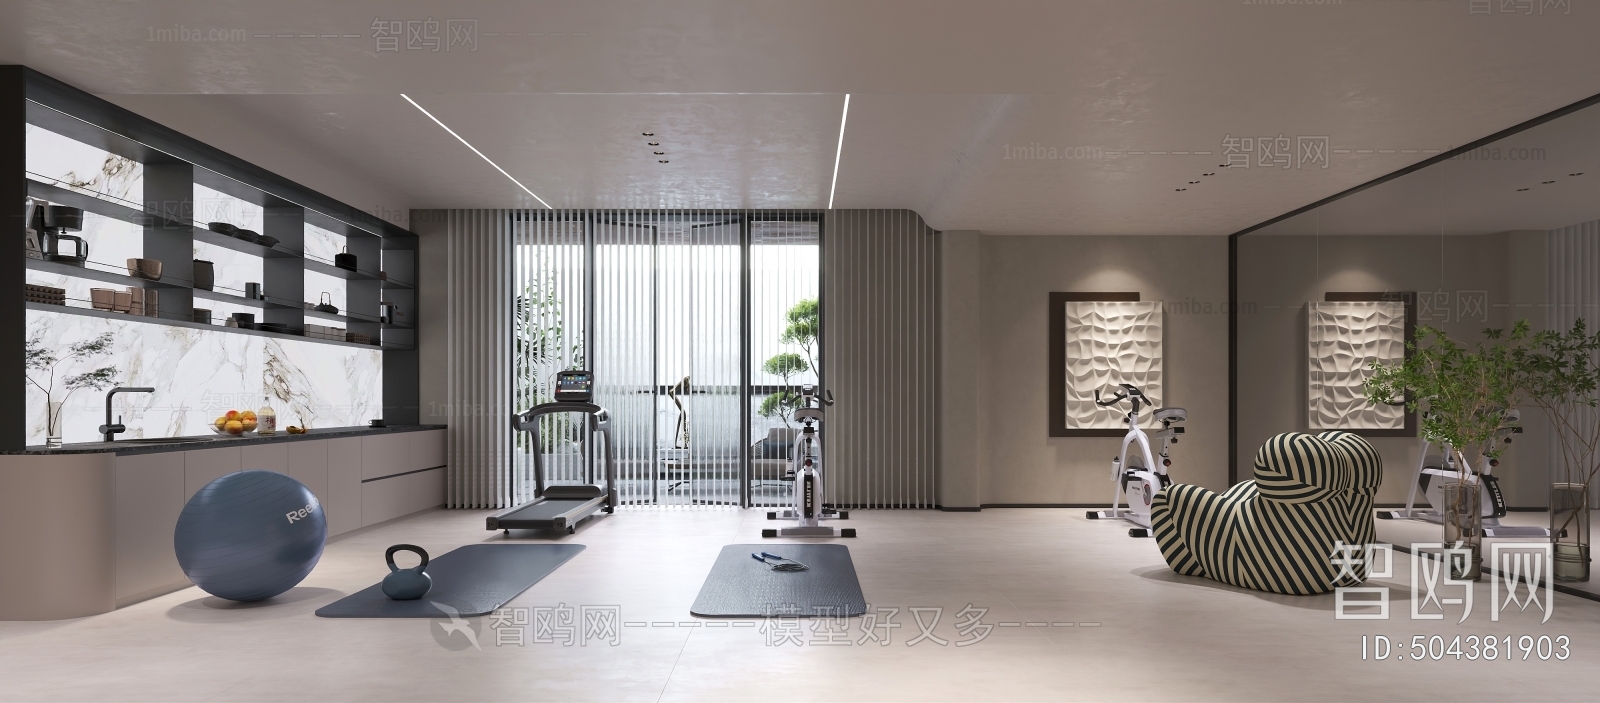 Wabi-sabi Style Home Fitness Room